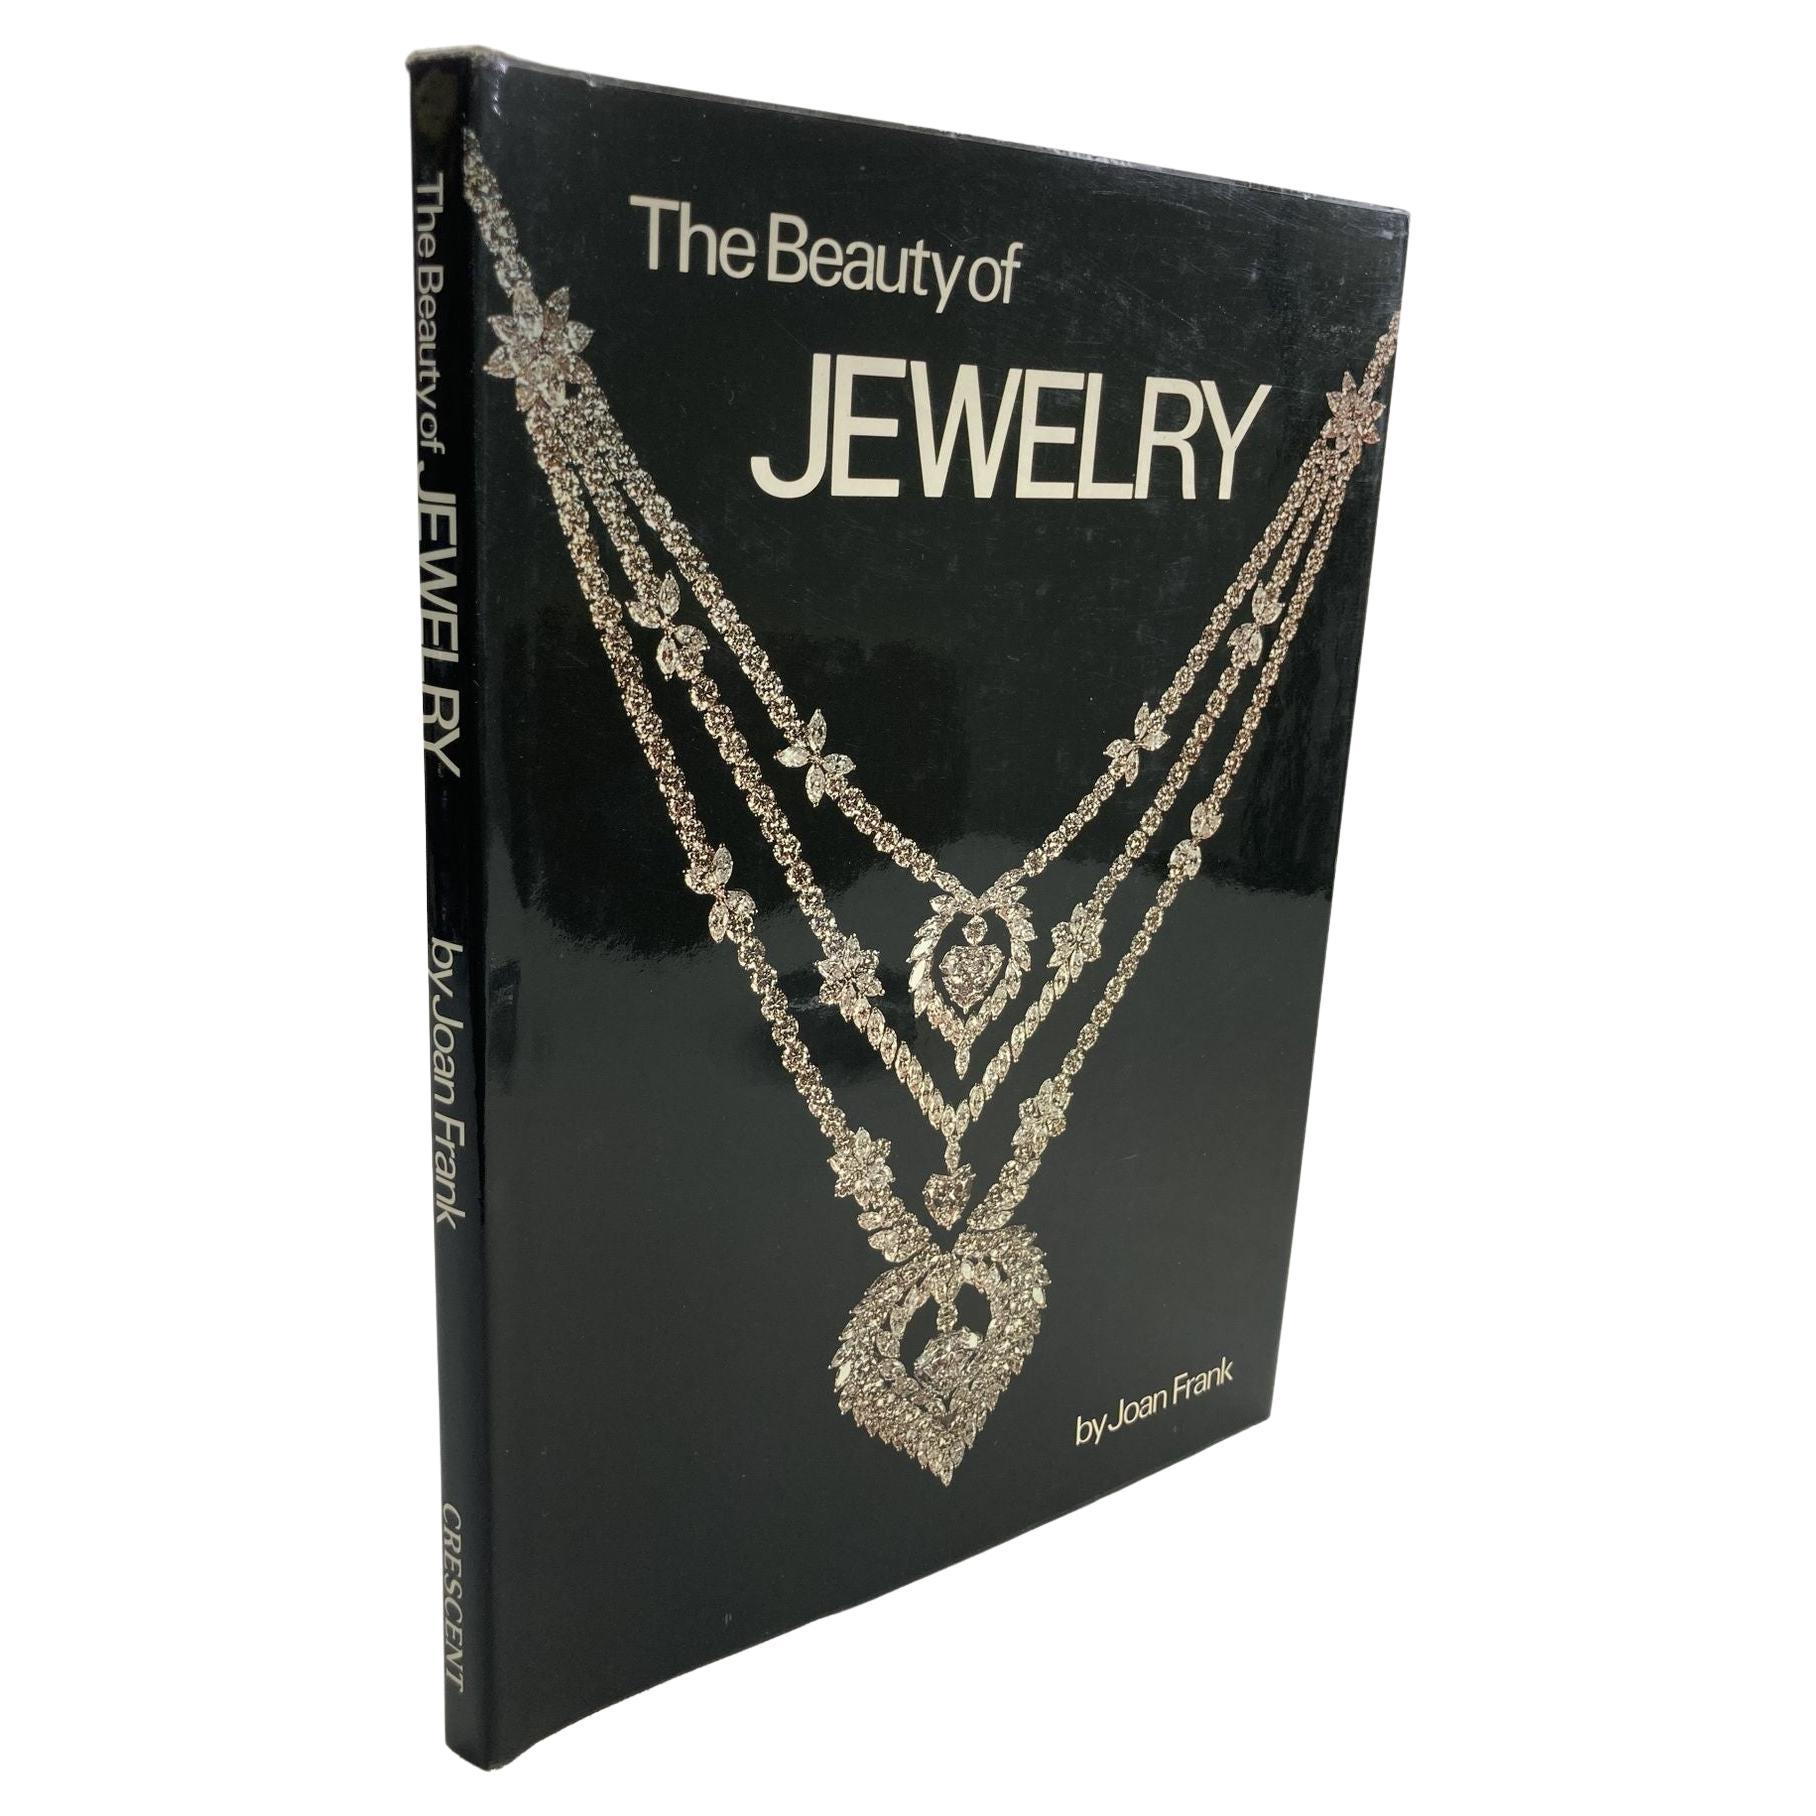 1979 The Beauty of Jewelry, Buch von Joan Frank im Angebot